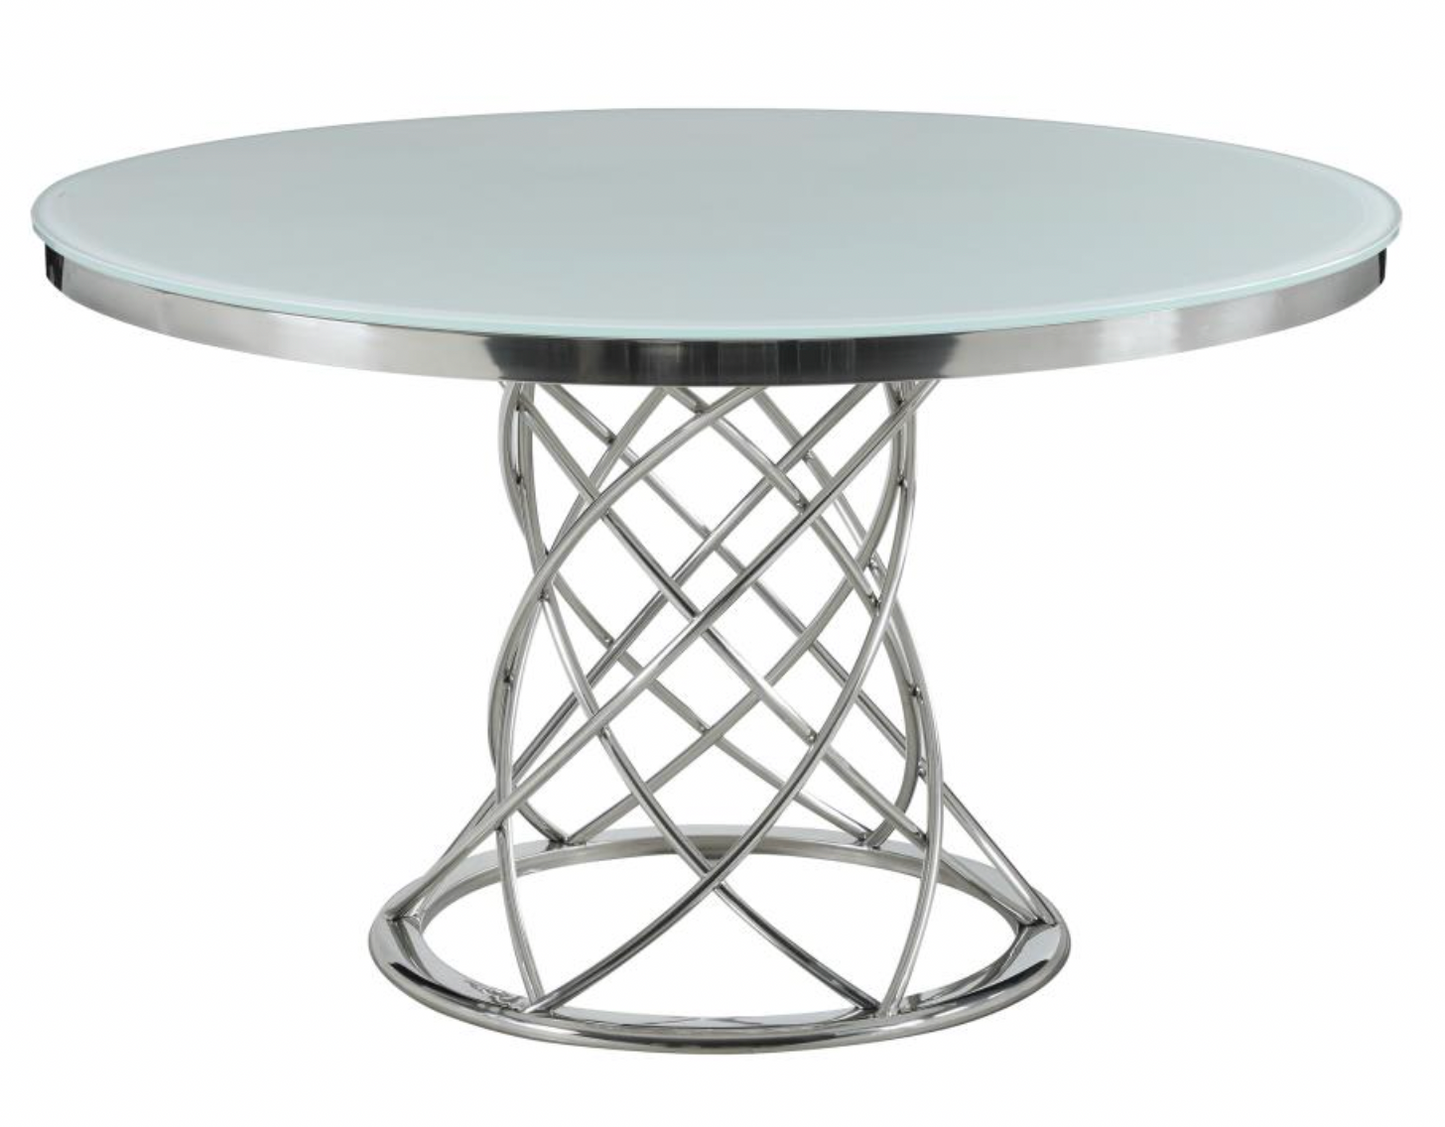 IRENE 5-piece Round Glass Top Dining Set